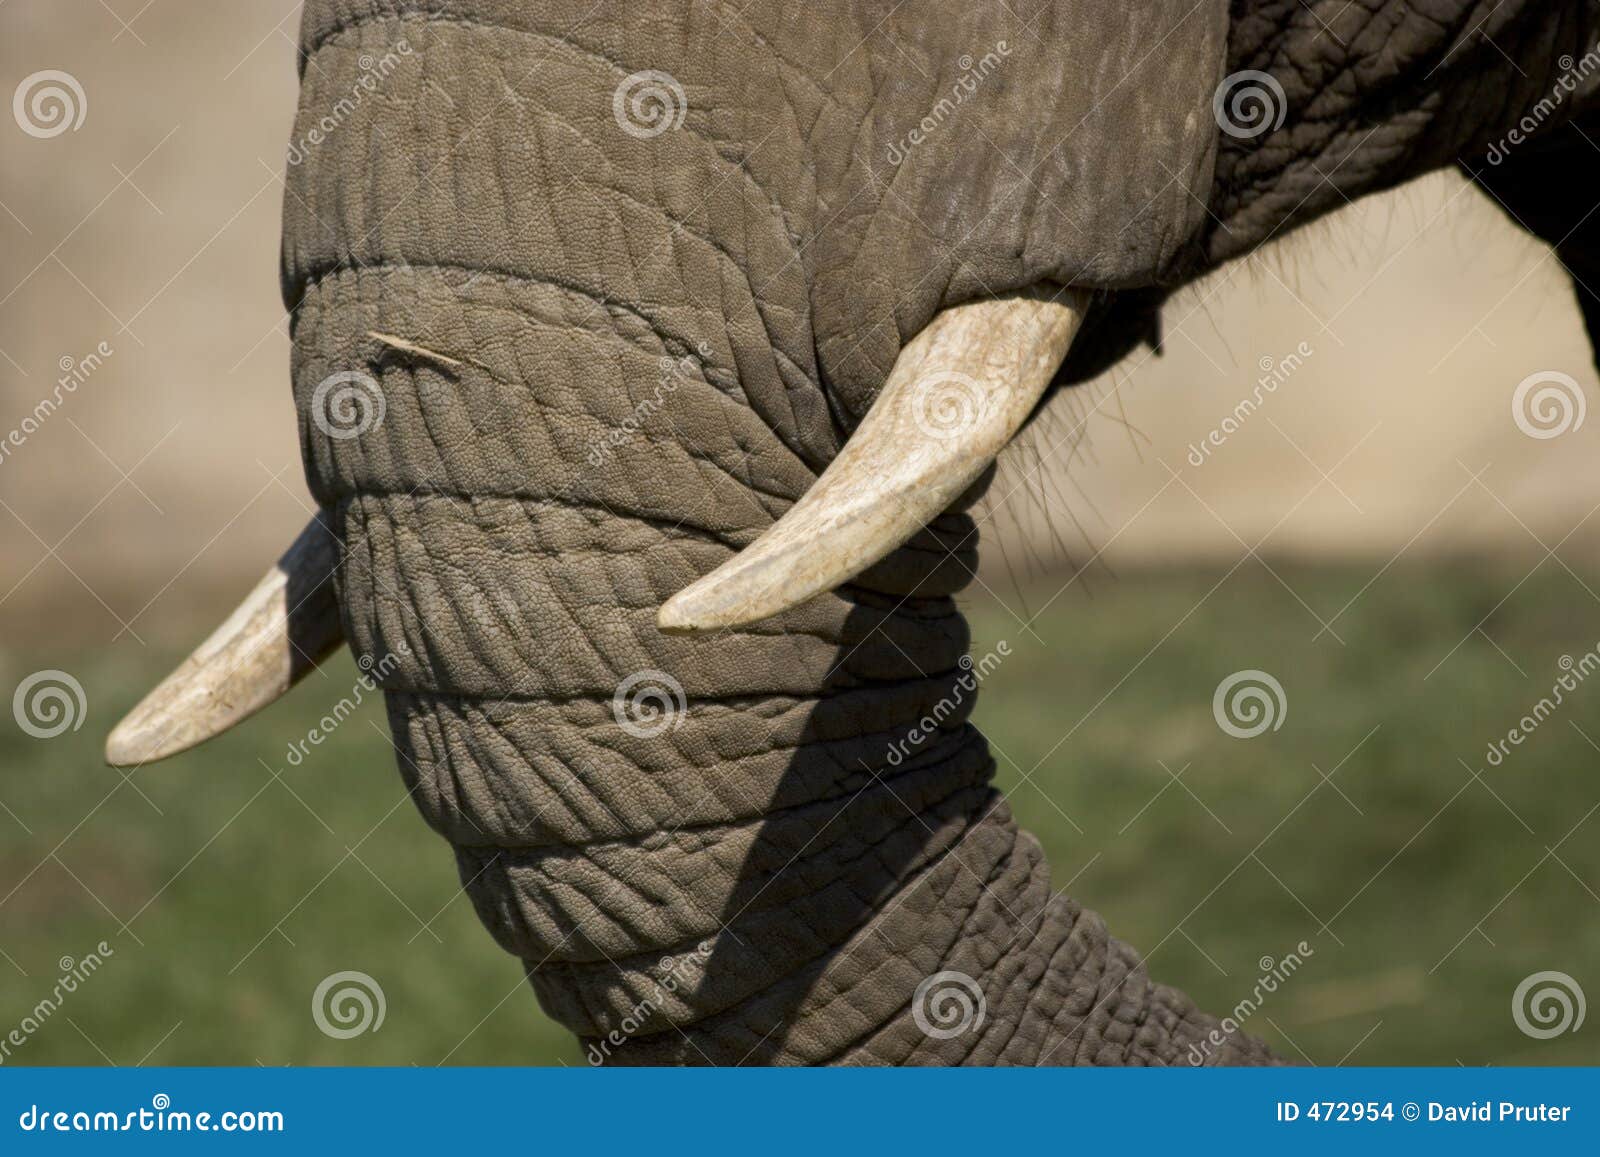 elephant tusks